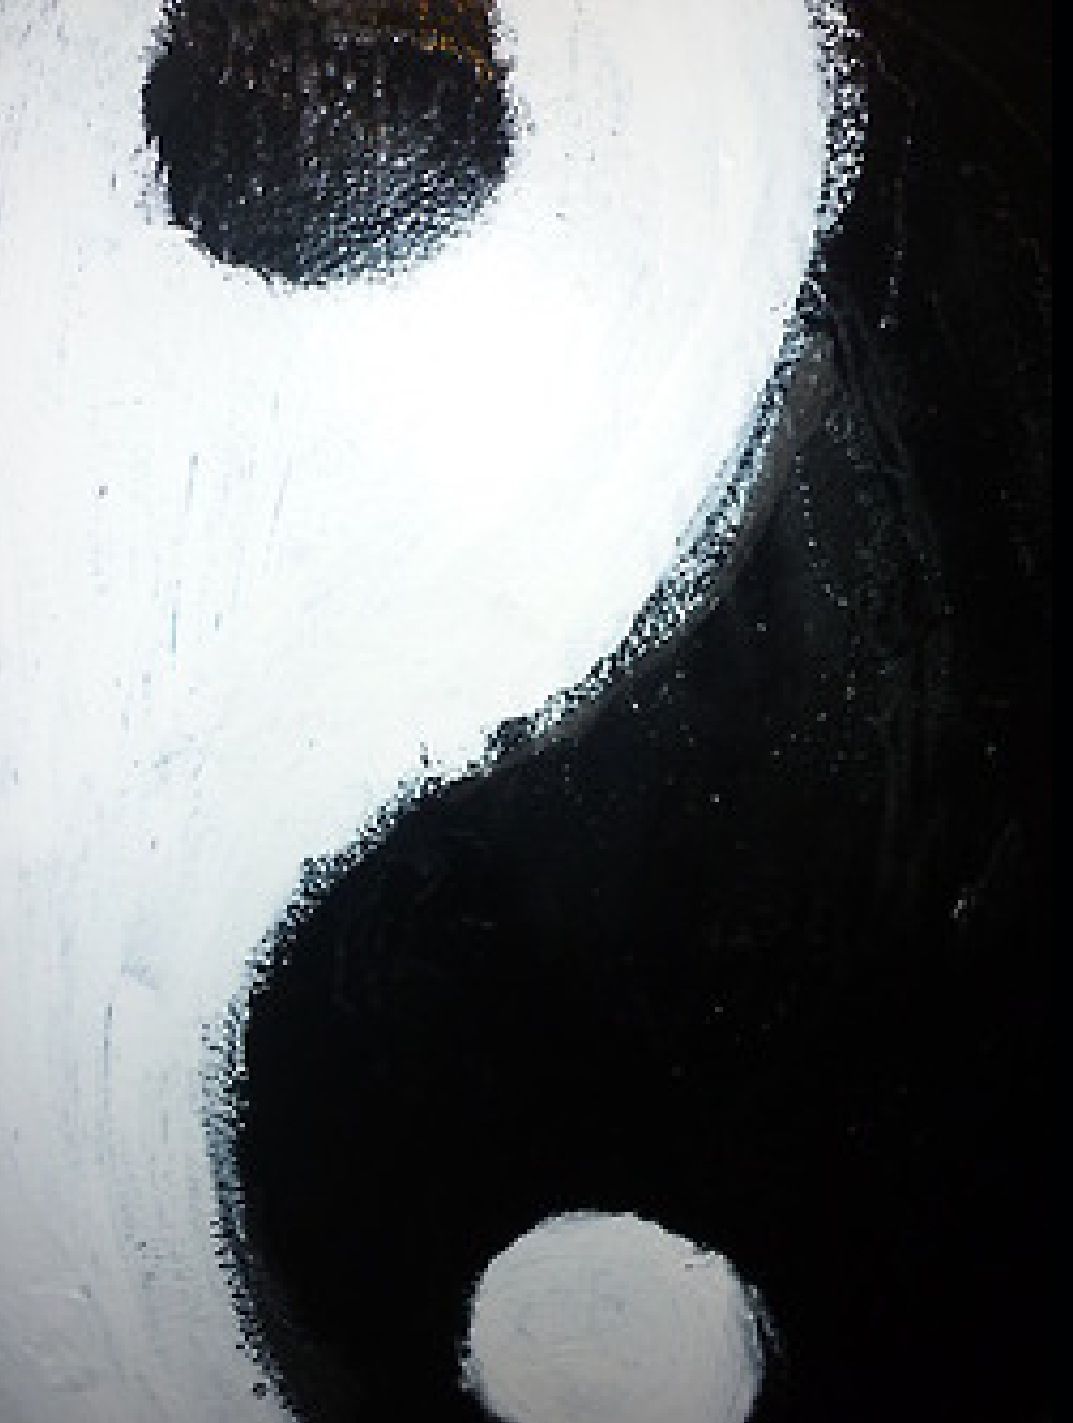 yin yang fondo de pantalla para iphone,negro,ojo,circulo,en blanco y negro,pestaña